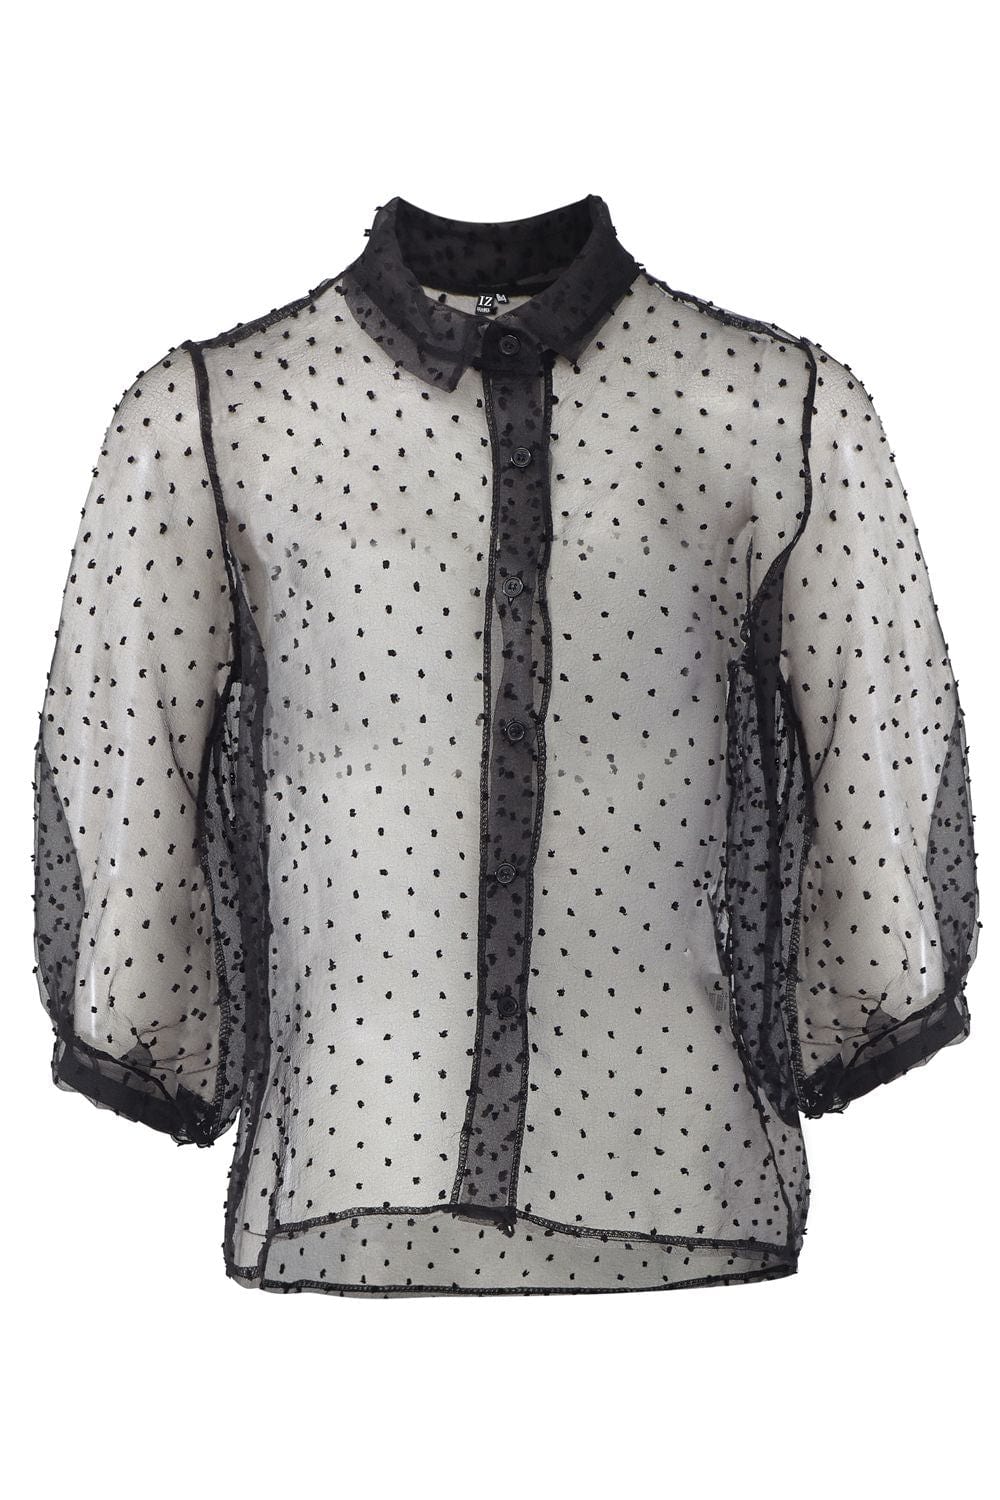 Black | Polka Dot Button Front Sheer Shirt